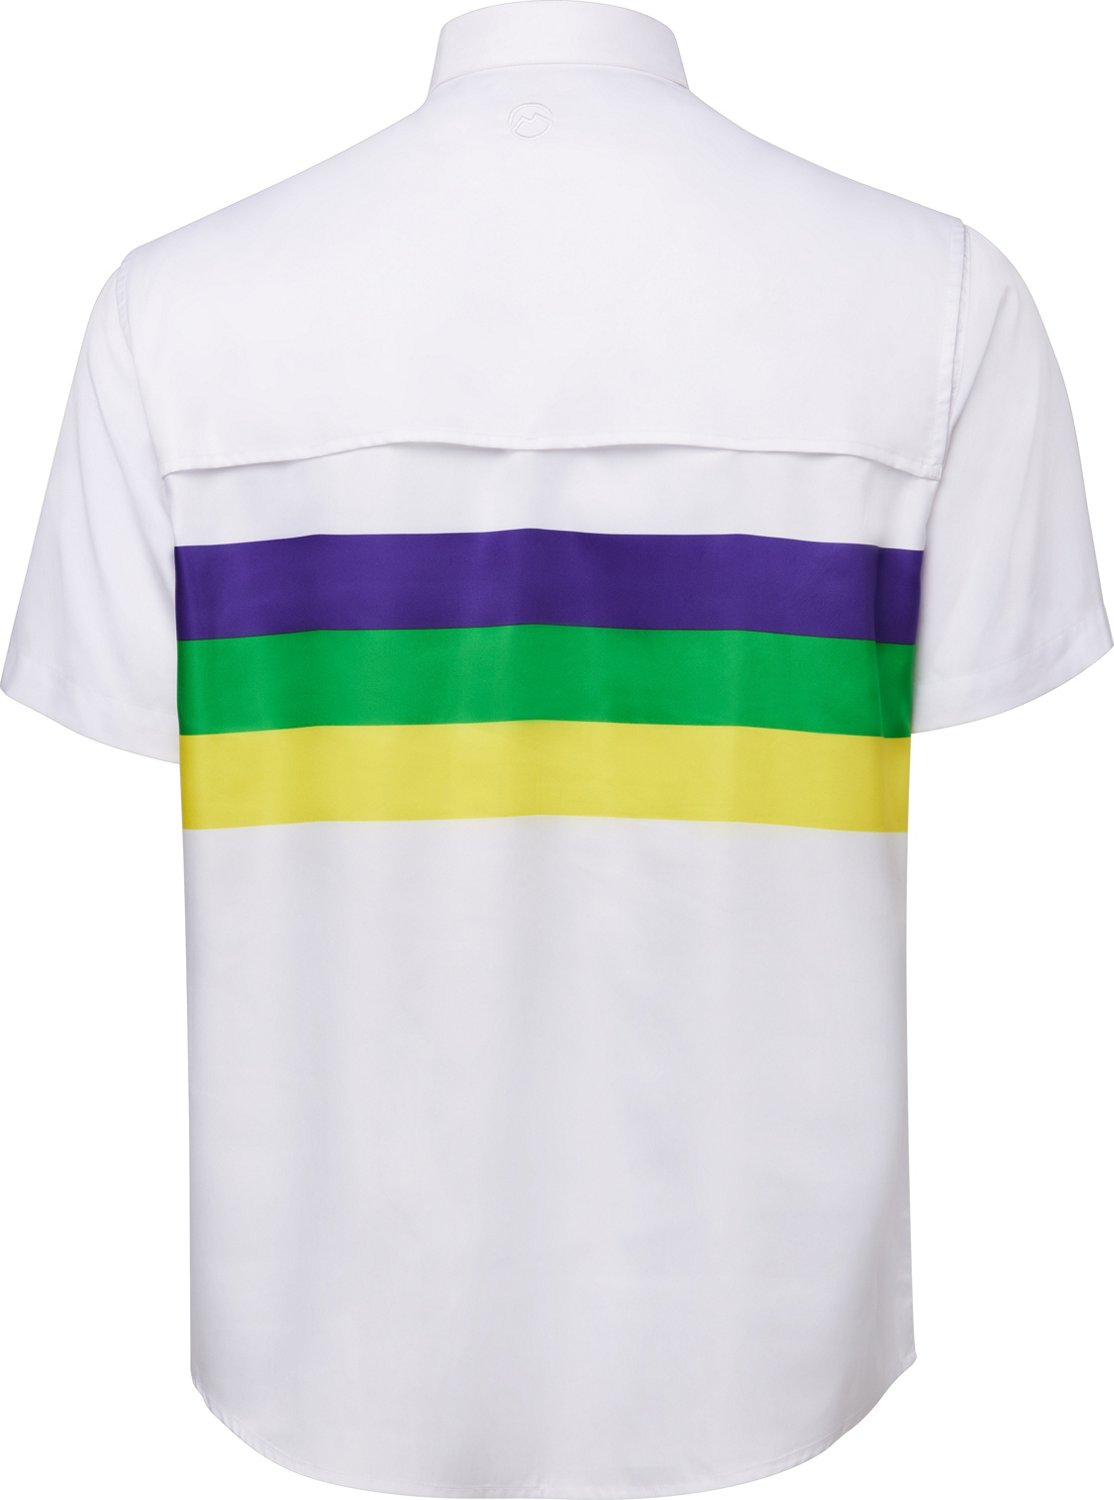 Magellan Outdoors Men's Mardi Gras Print Short Sleeve Shirt